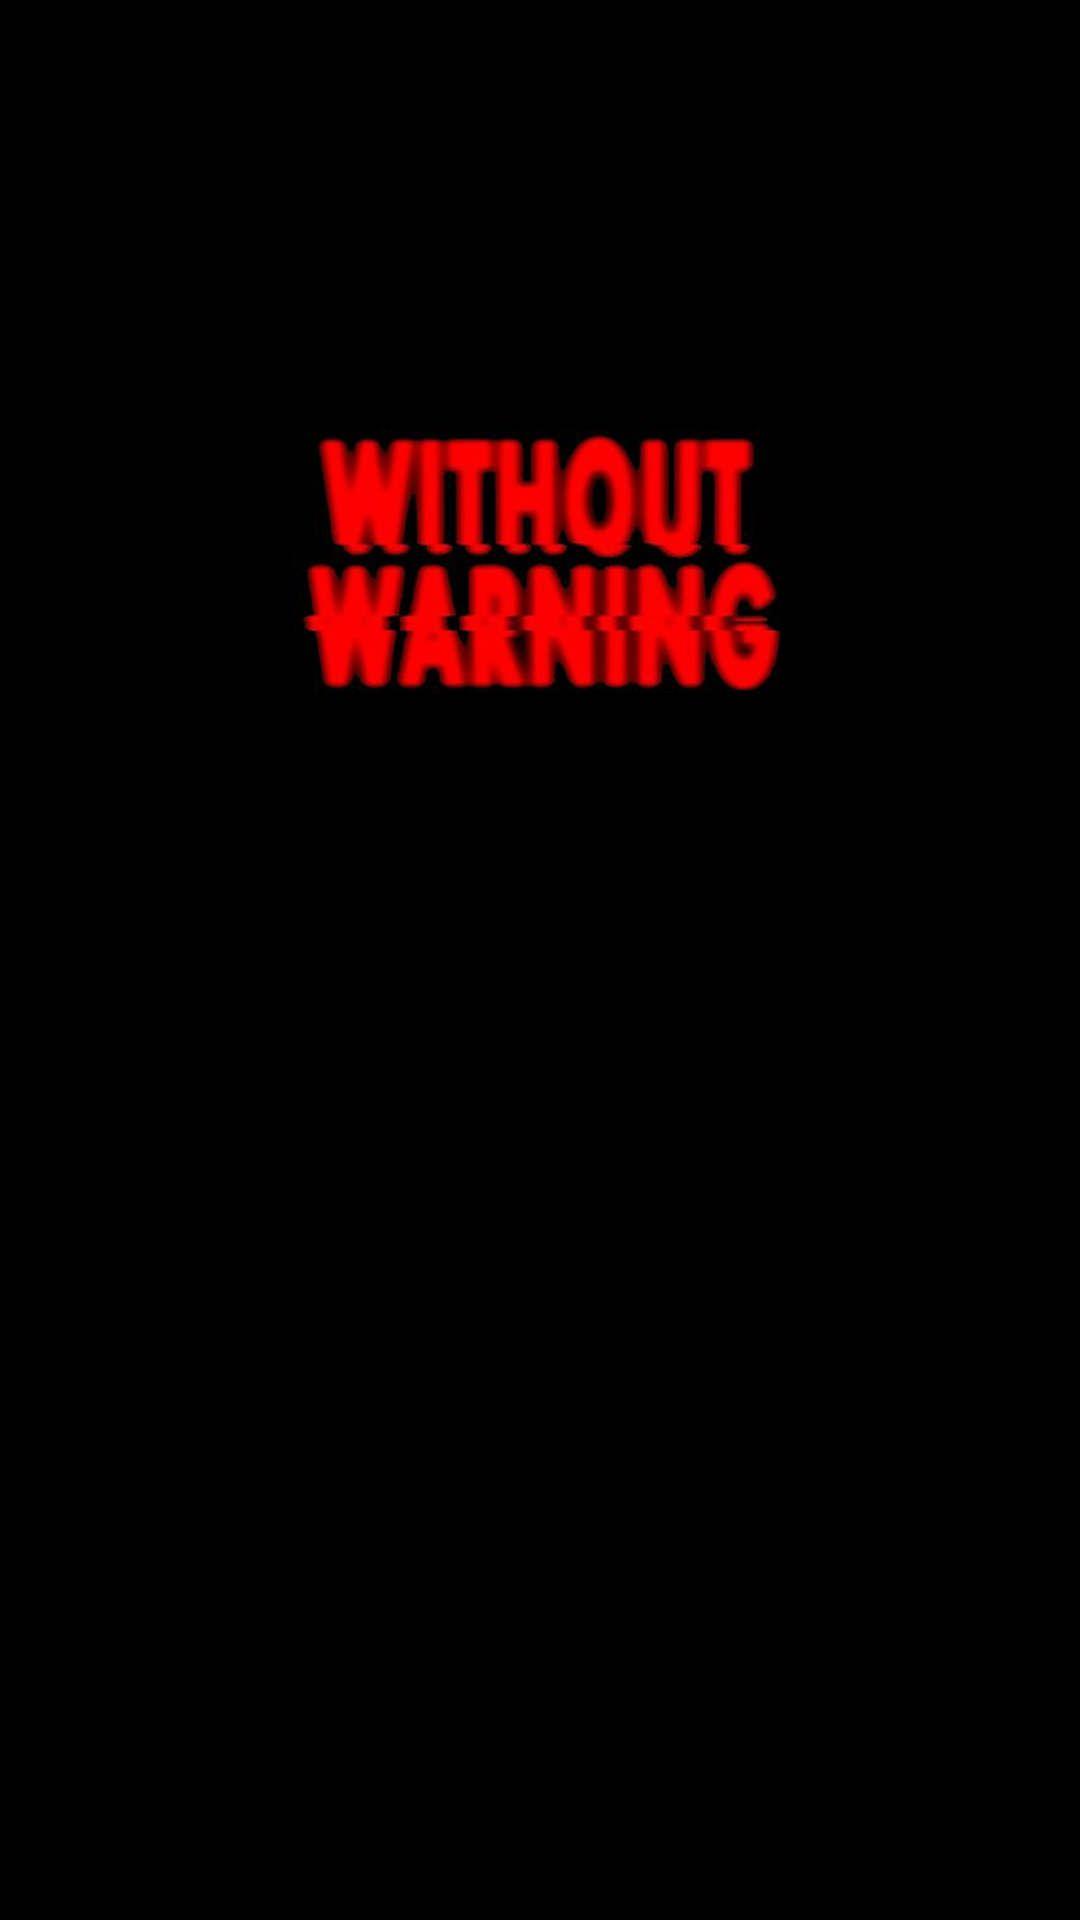 44 Warning Wallpaper HD  WallpaperSafari